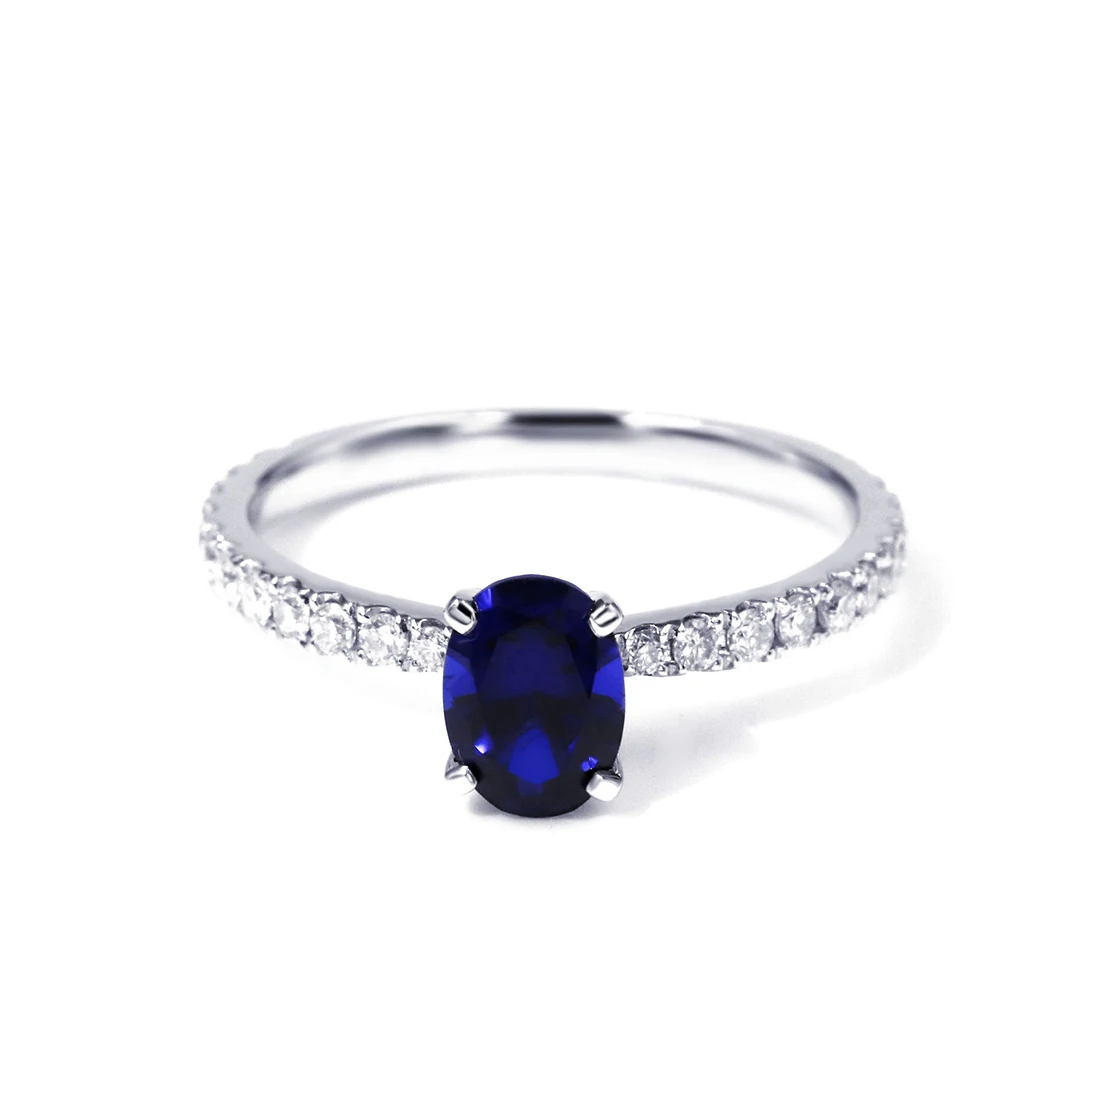 

Tianyu gems fashion 5x7mm oval shape blue corundum moissanite 14k white gold solid gold women jewelry wedding engagement ring